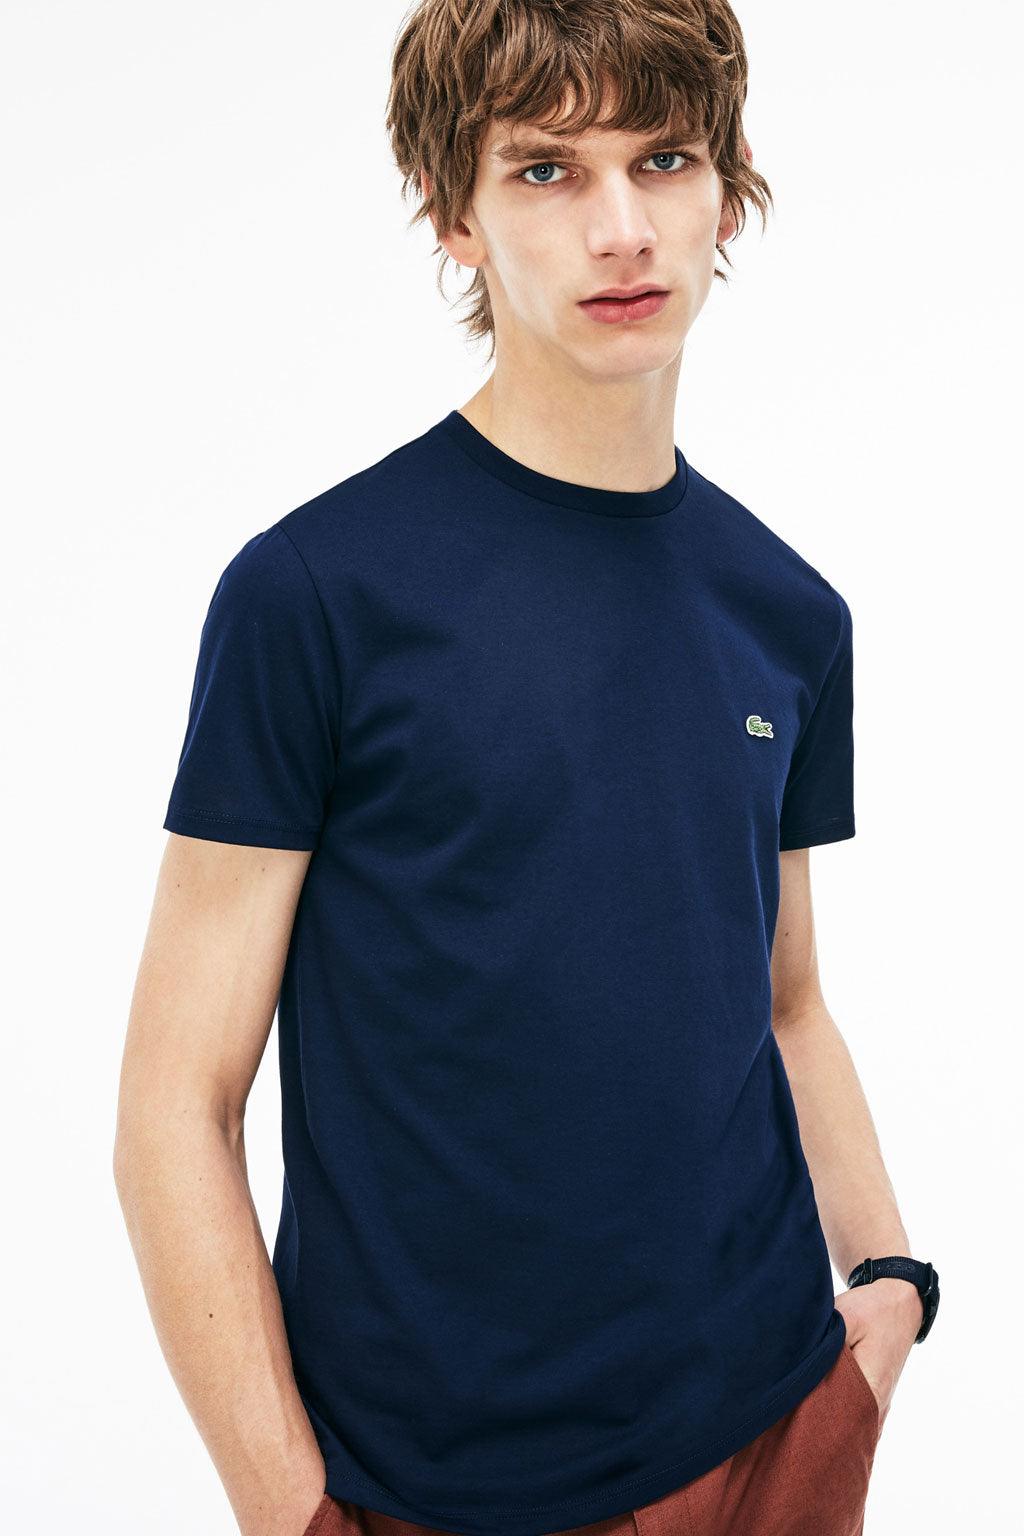 Lacoste t-shirt |  Big Boss | the menswear concept.